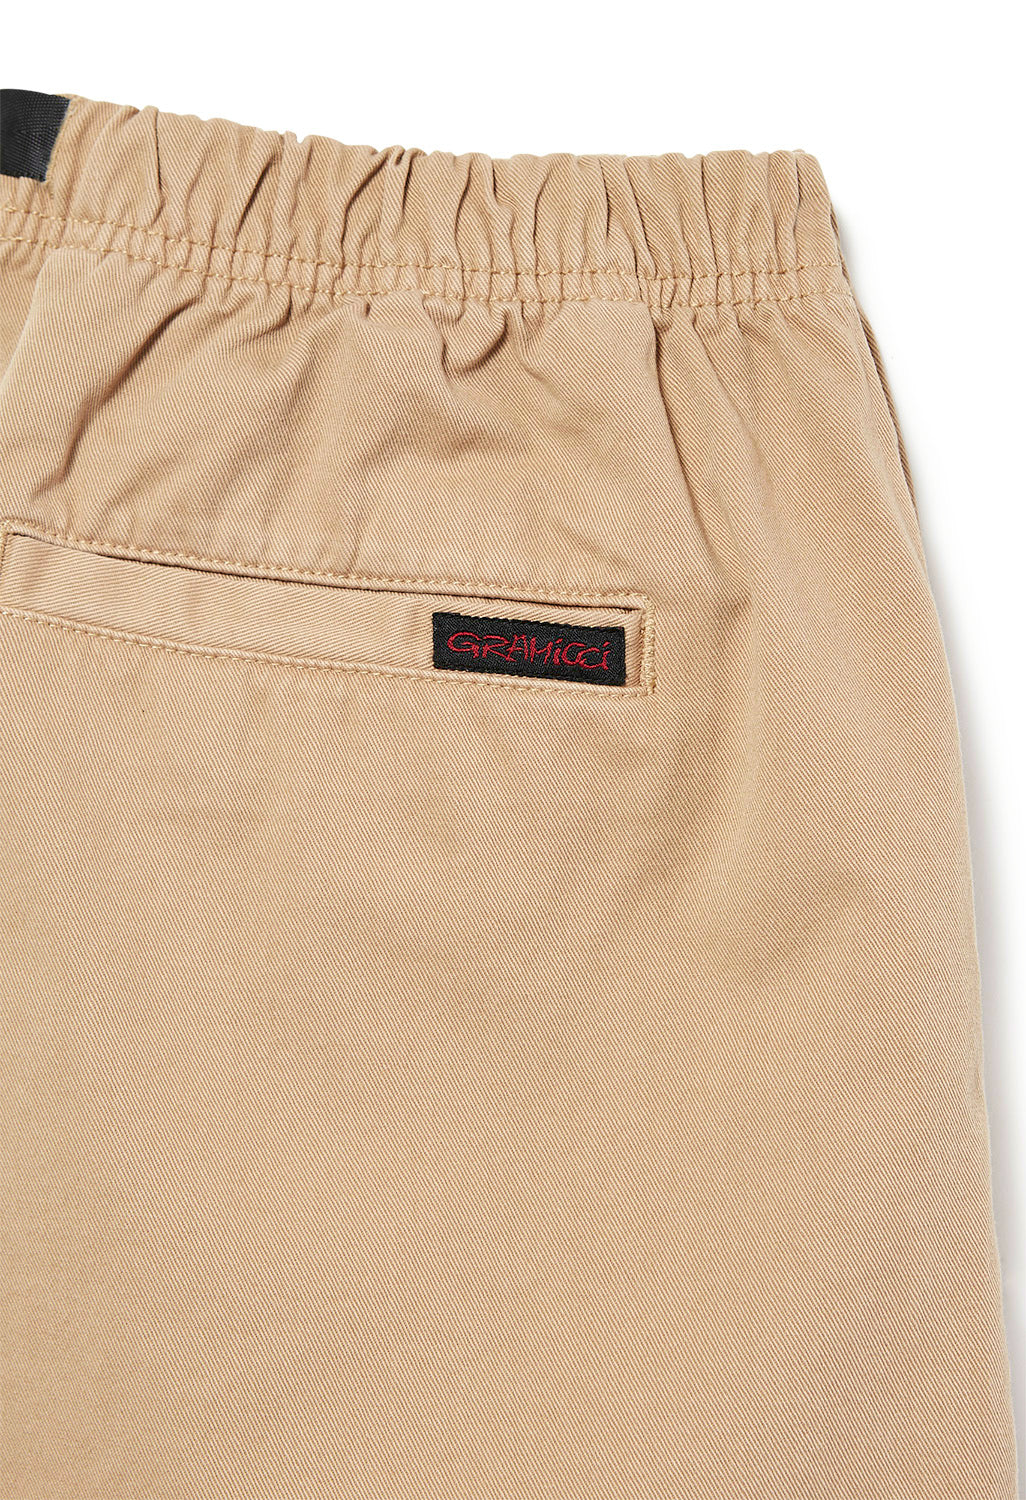 Gramicci Men's G Shorts - Chino